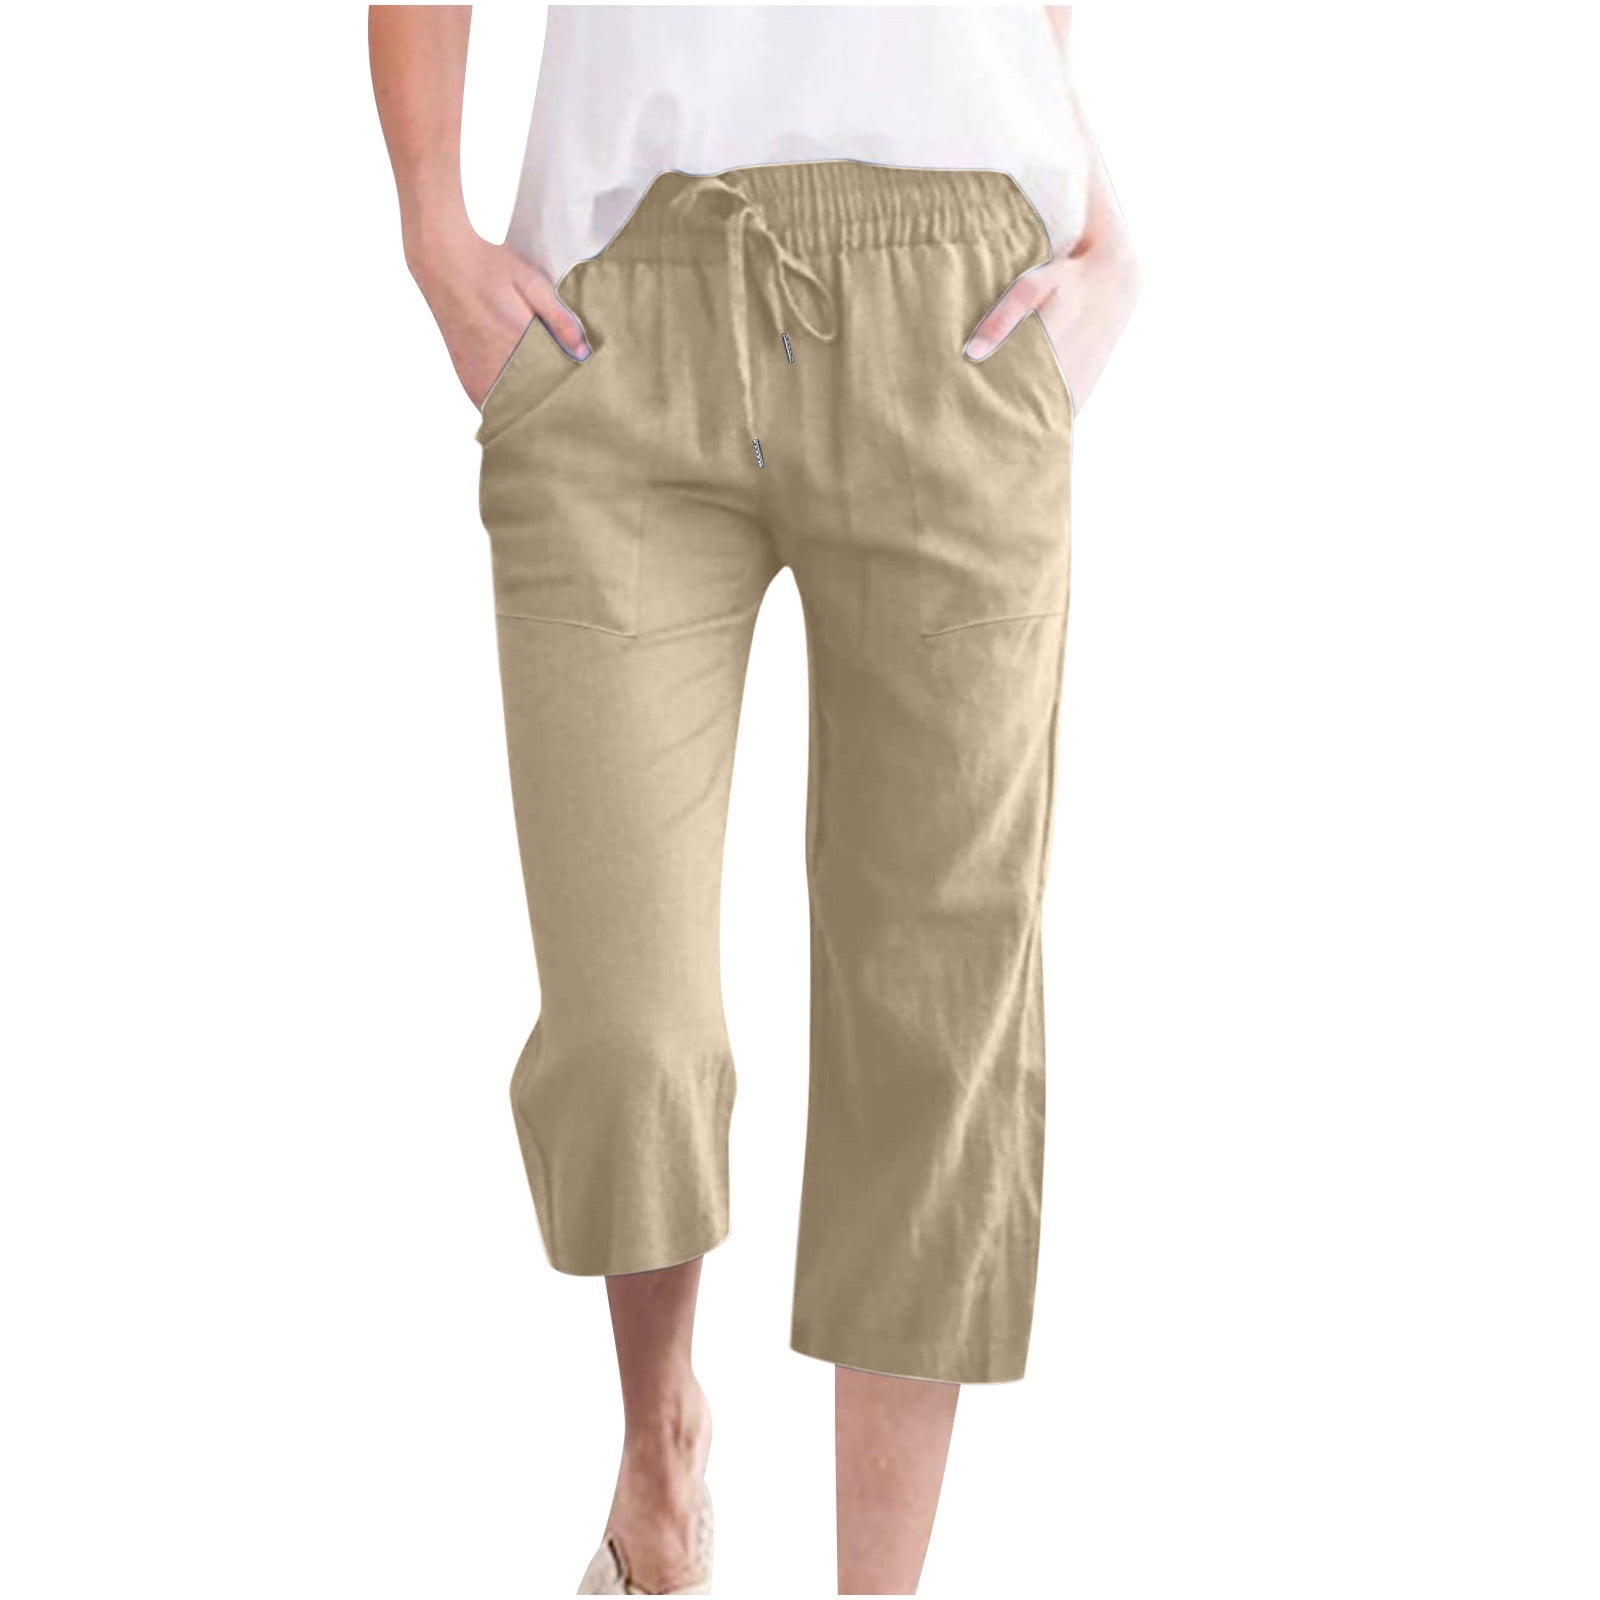 Cotton Linen Pants for Women Elastic Waist Drawstring Plain Capri Pants ...